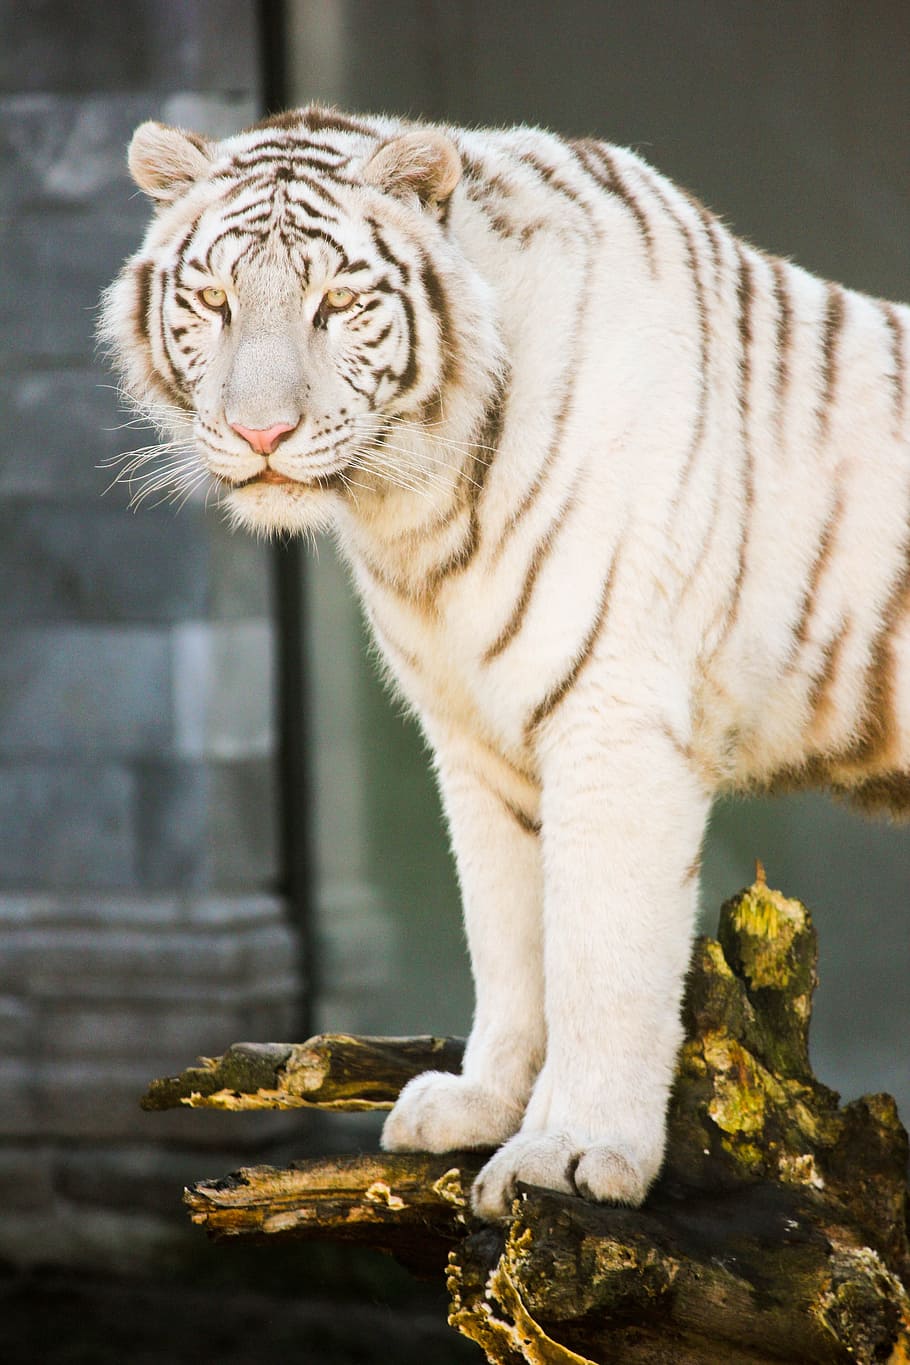 tigre albino, mirando, lente de la cámara, tigre blanco, felino, zoológico, animal, temas de animales, un animal, fauna animal